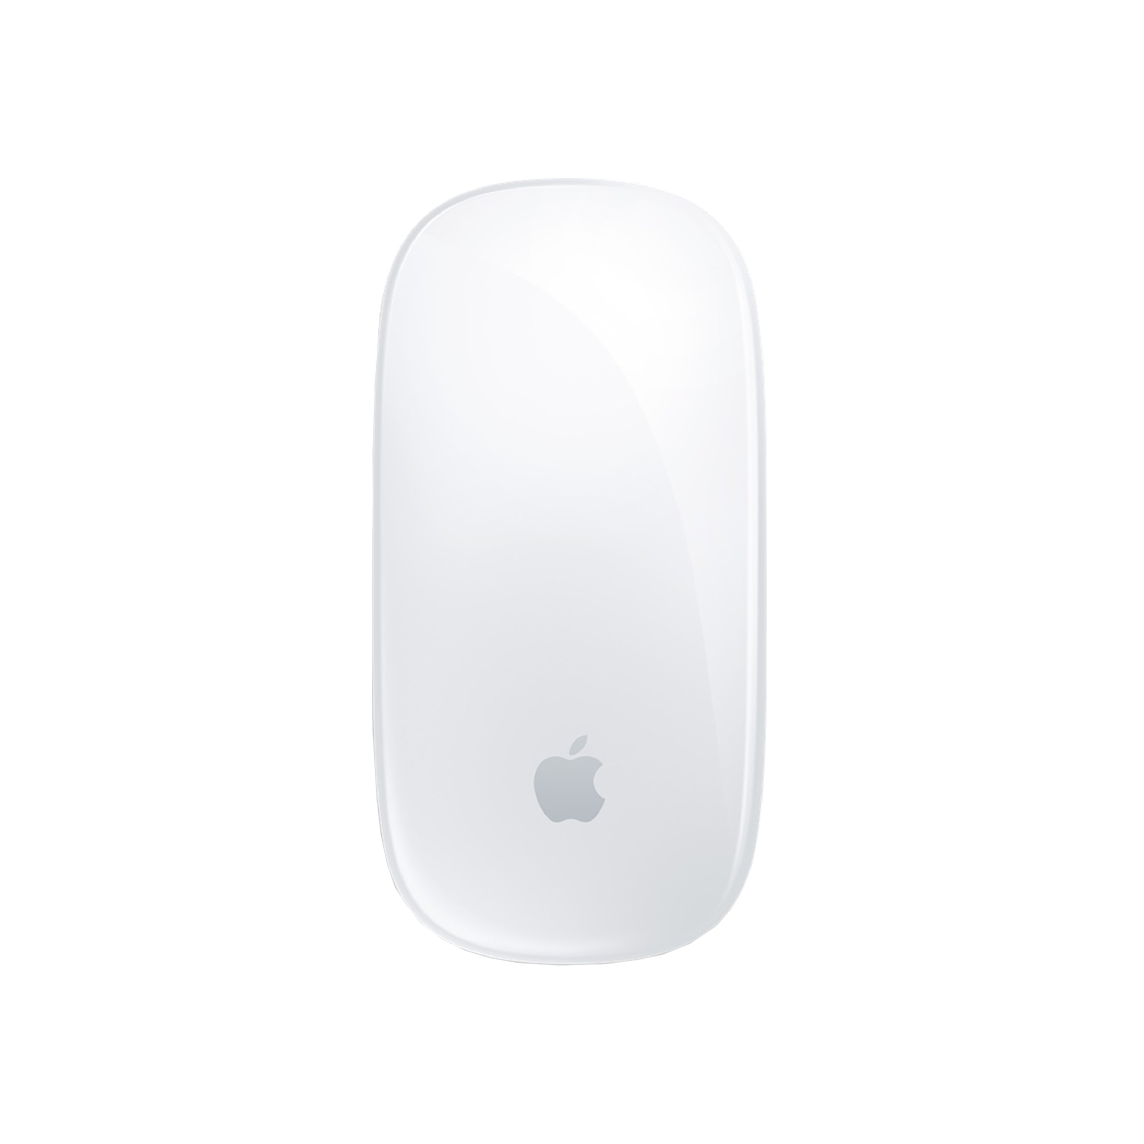 Refurbished Apple Magic Mouse 1 - test-product-media-liquid1